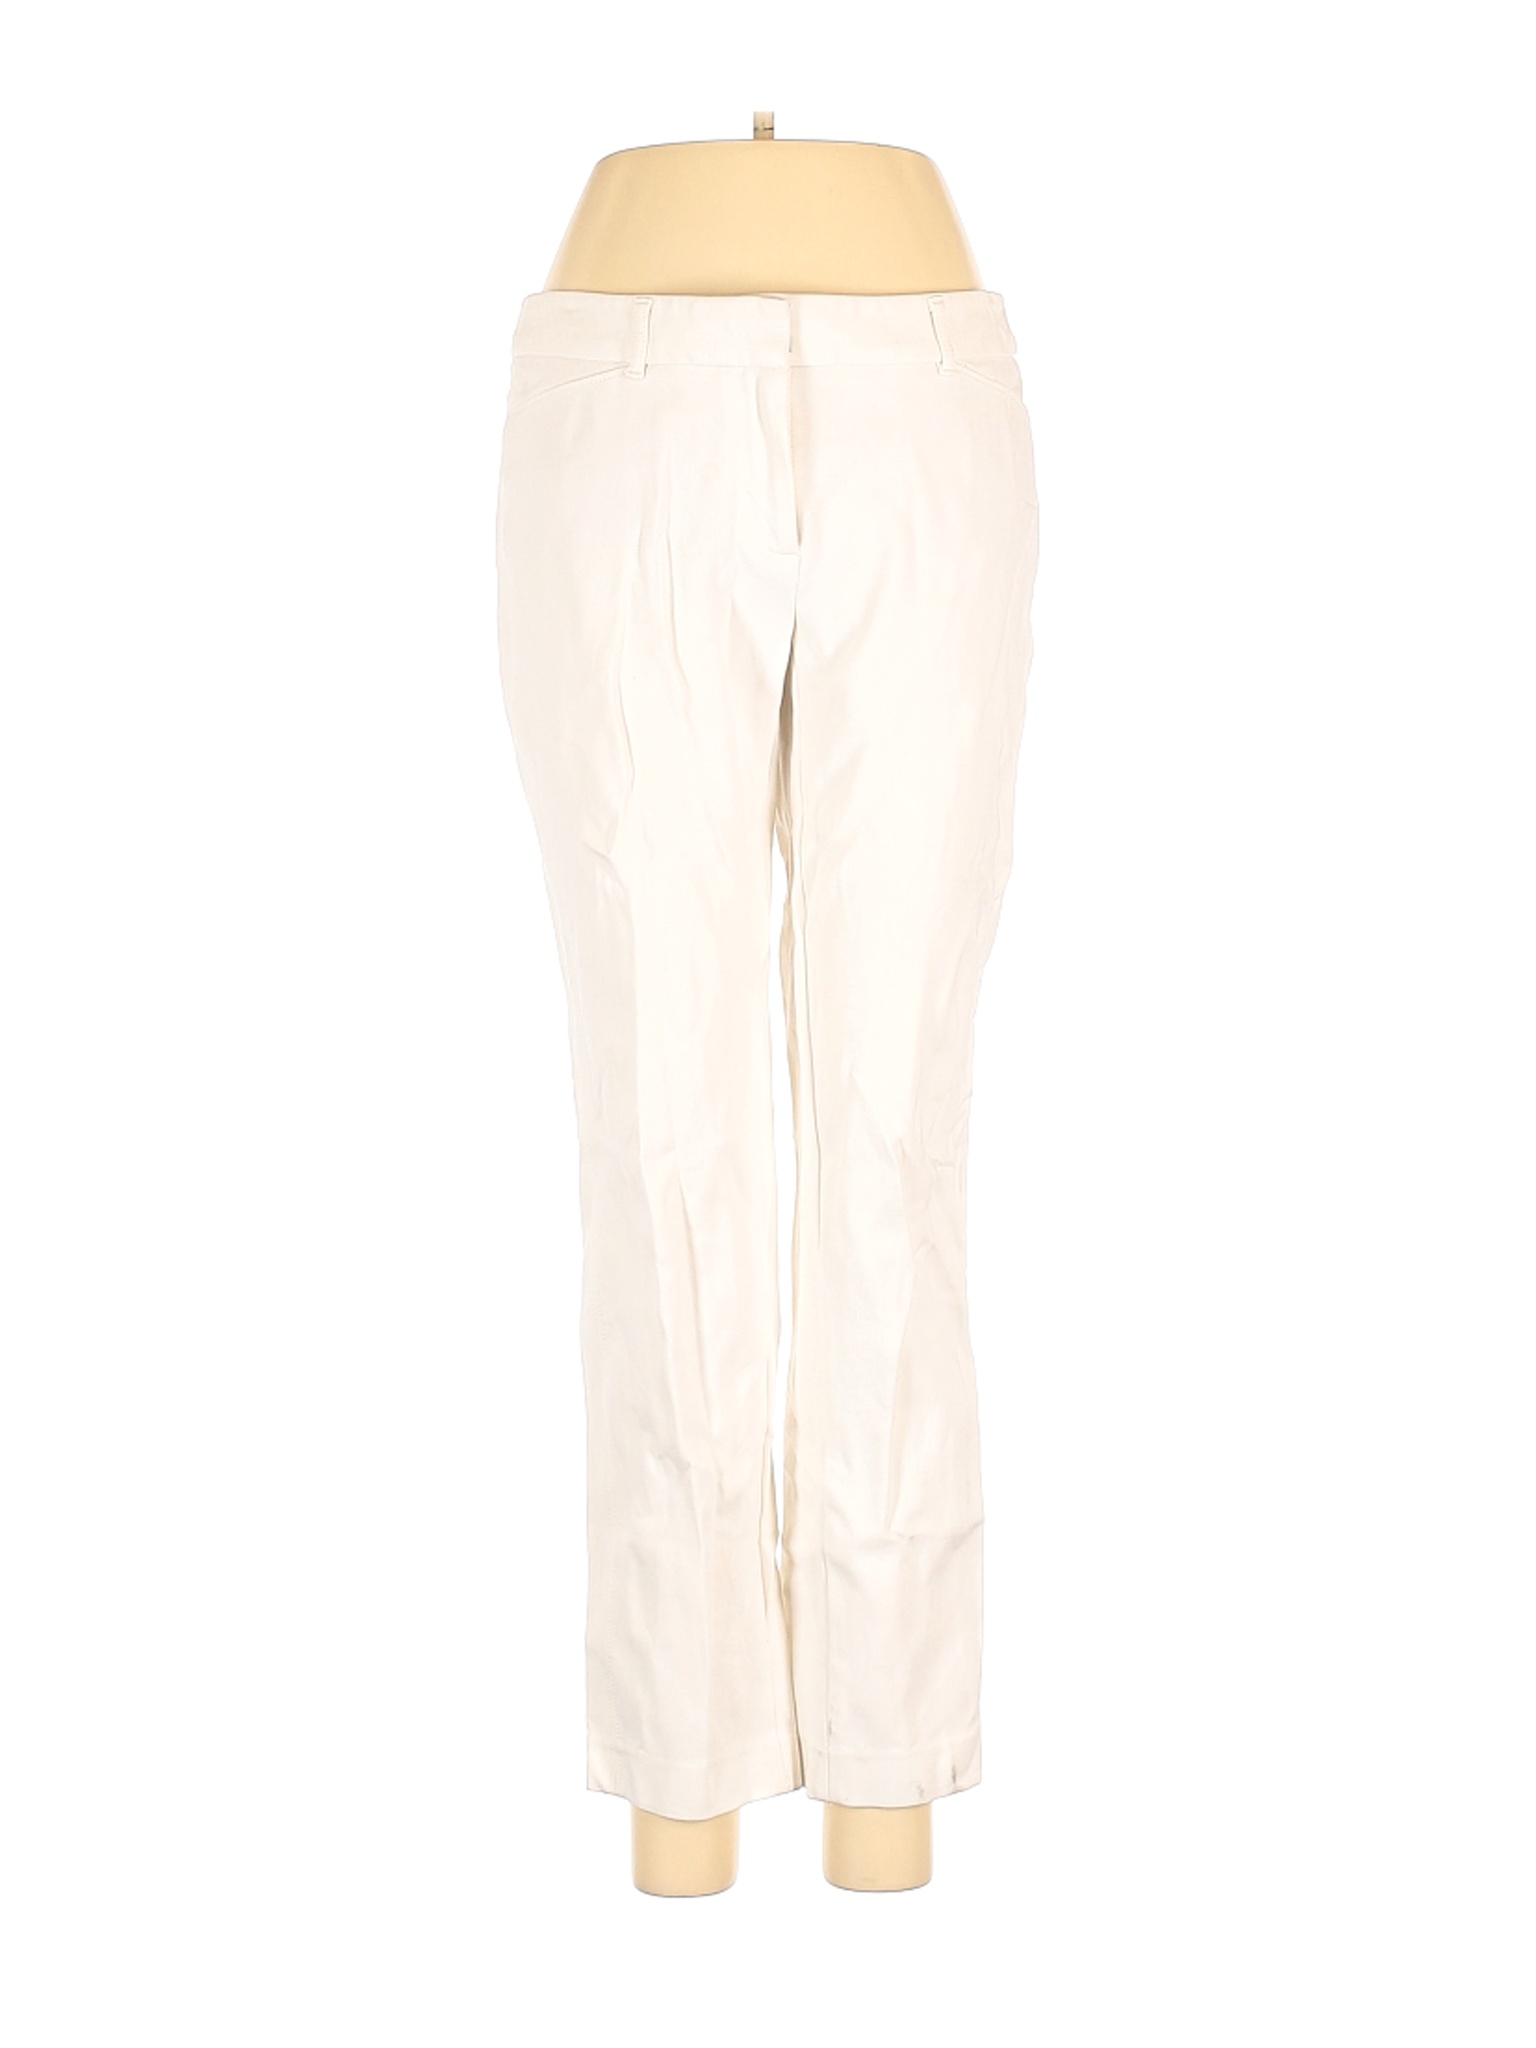 White House Black Market Women Ivory Dress Pants 4 | eBay